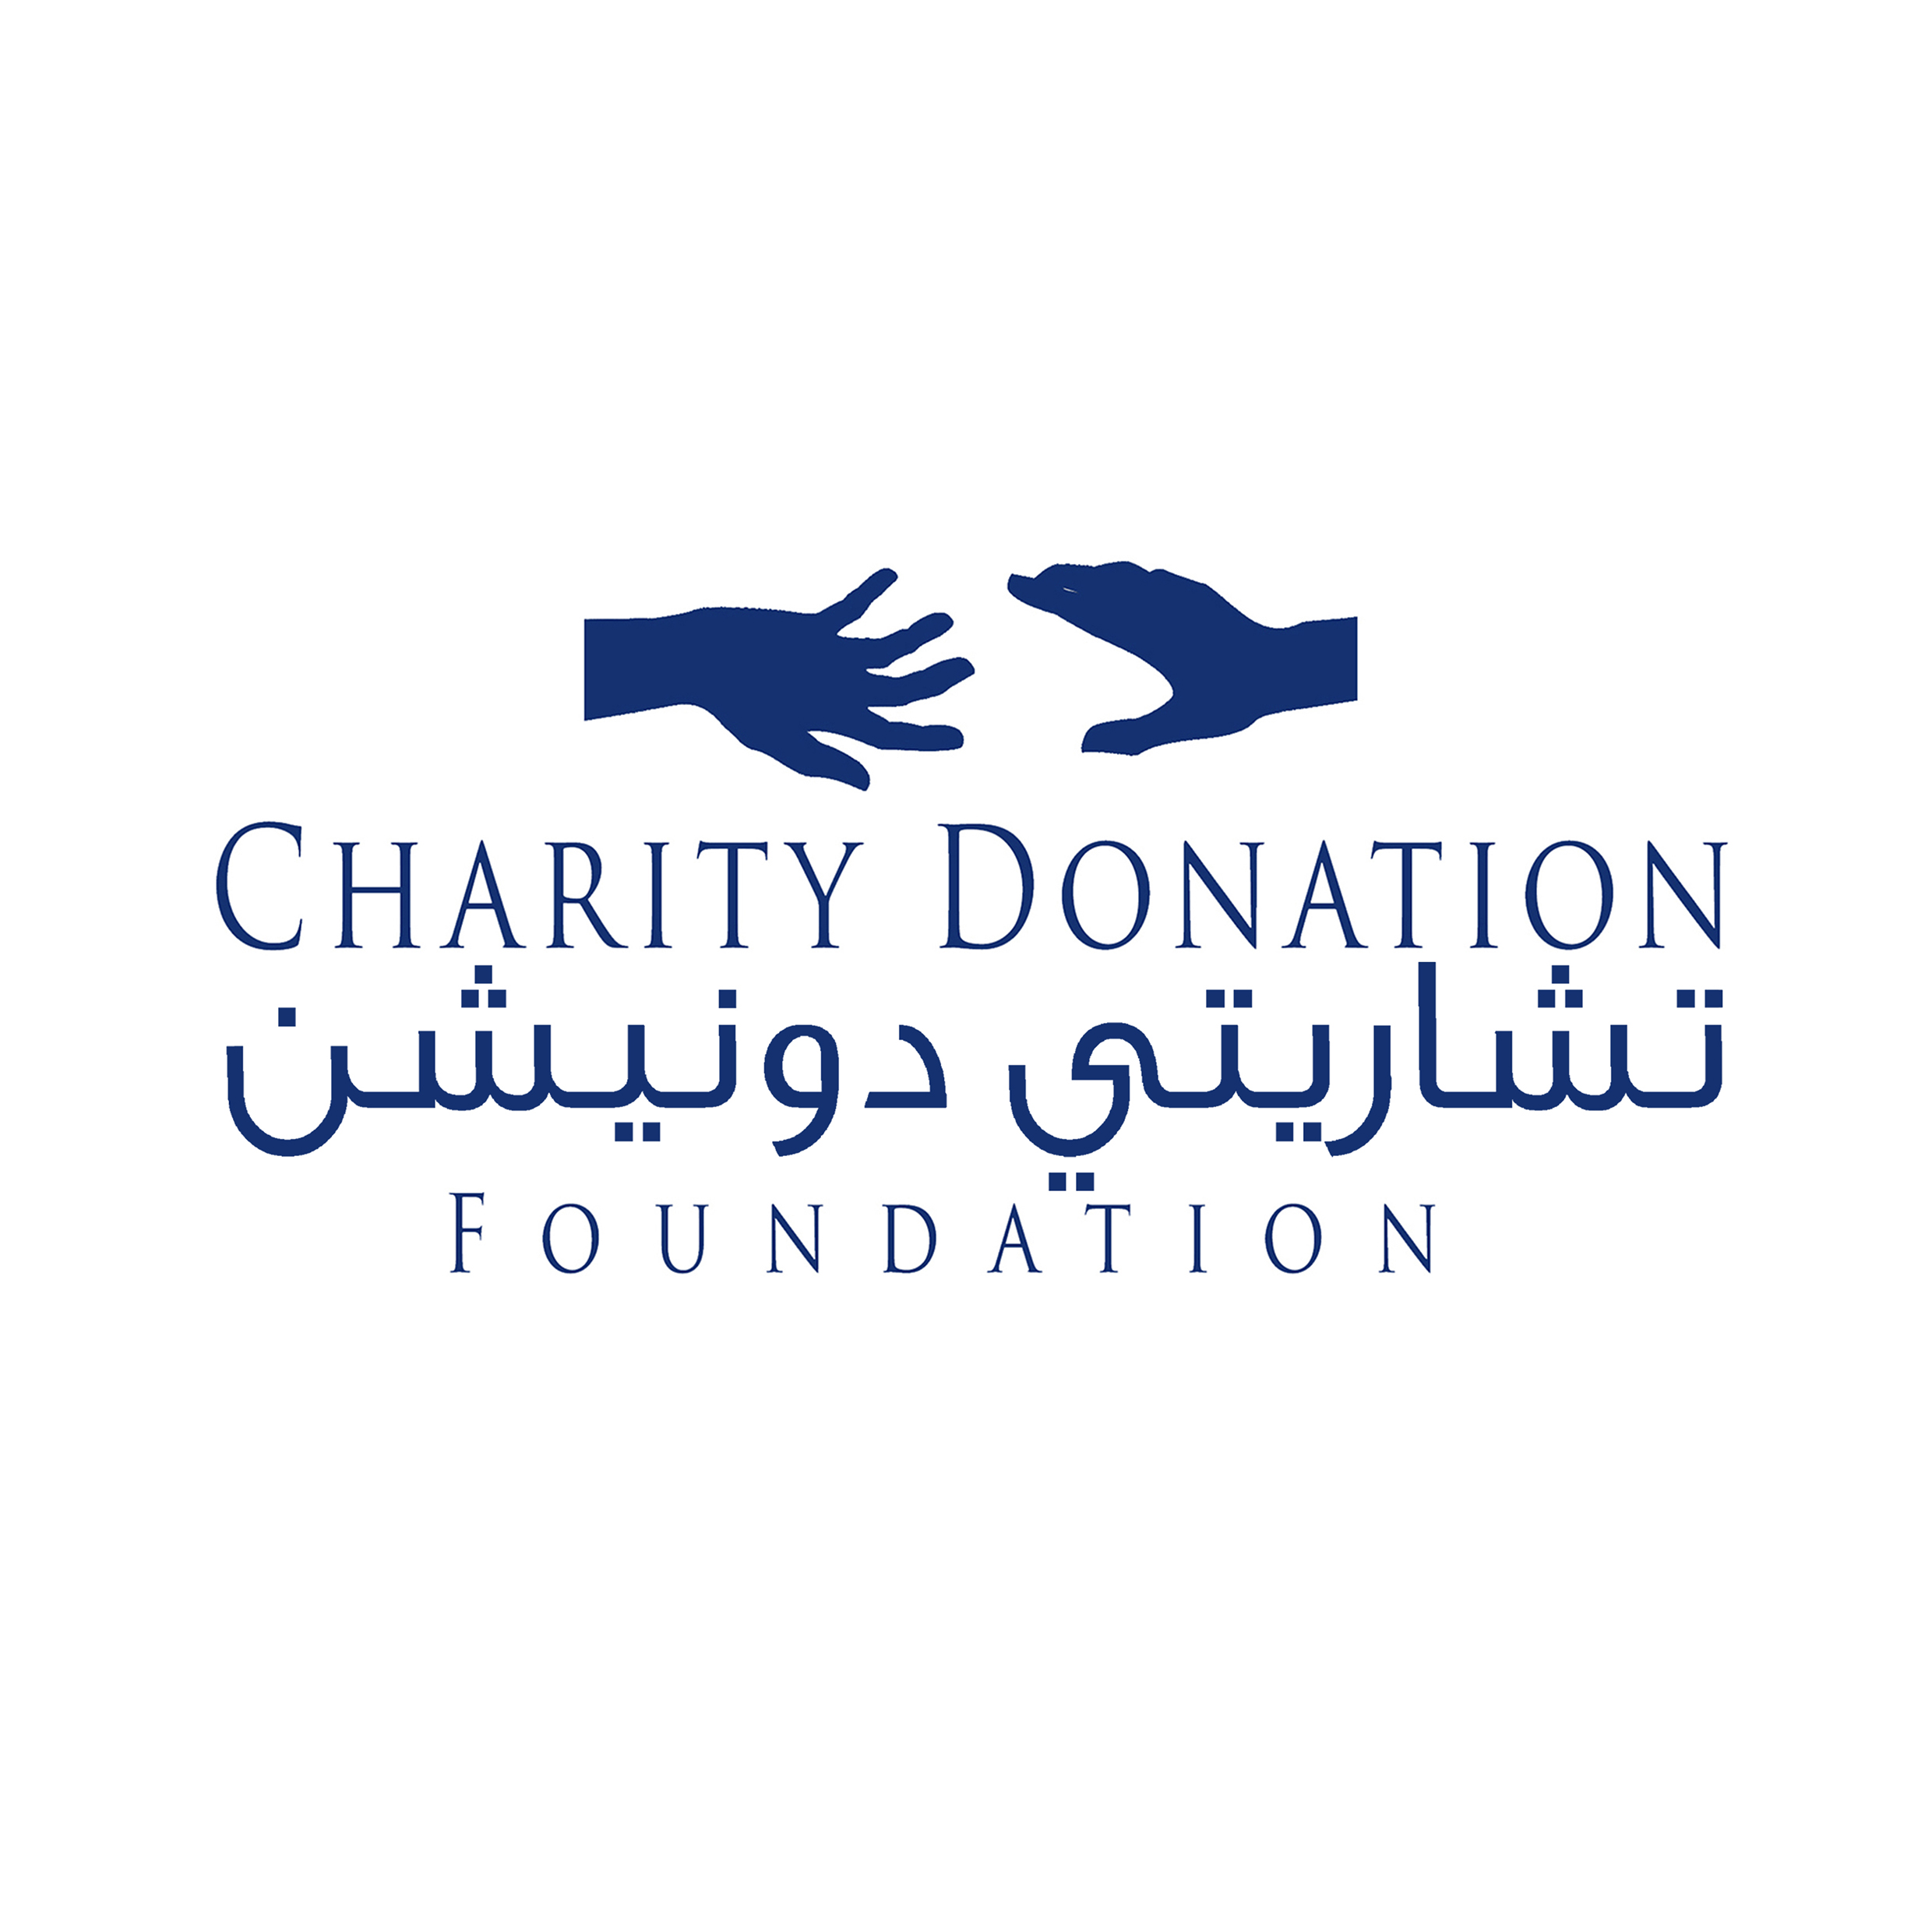 Charity Donation Foundation